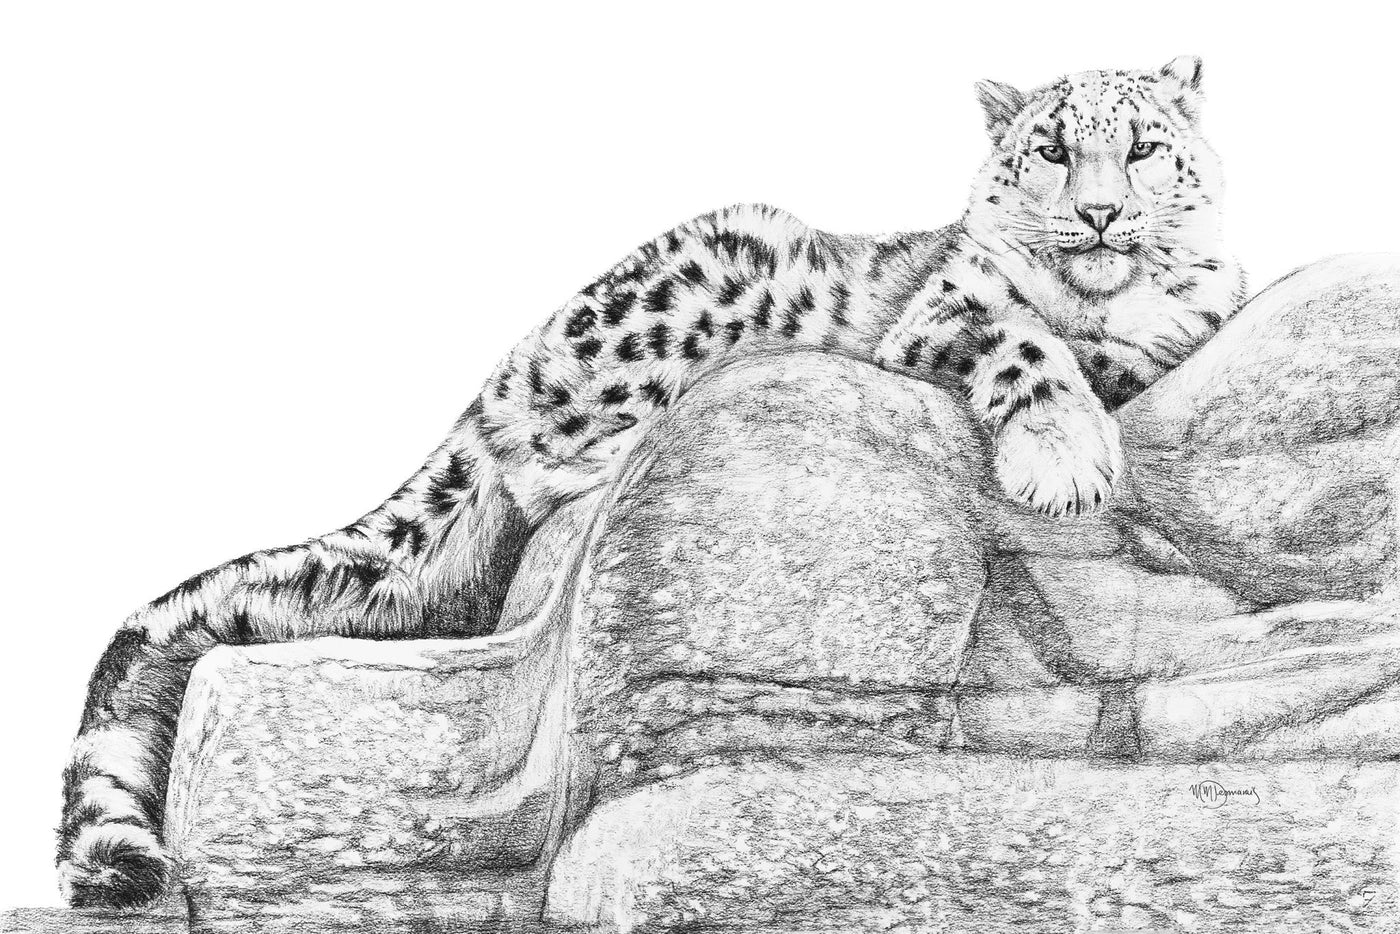 ORIGINAL ARTWORK - Snow leopard - From the Zoo de Granby Collaboration - LE NID atelier